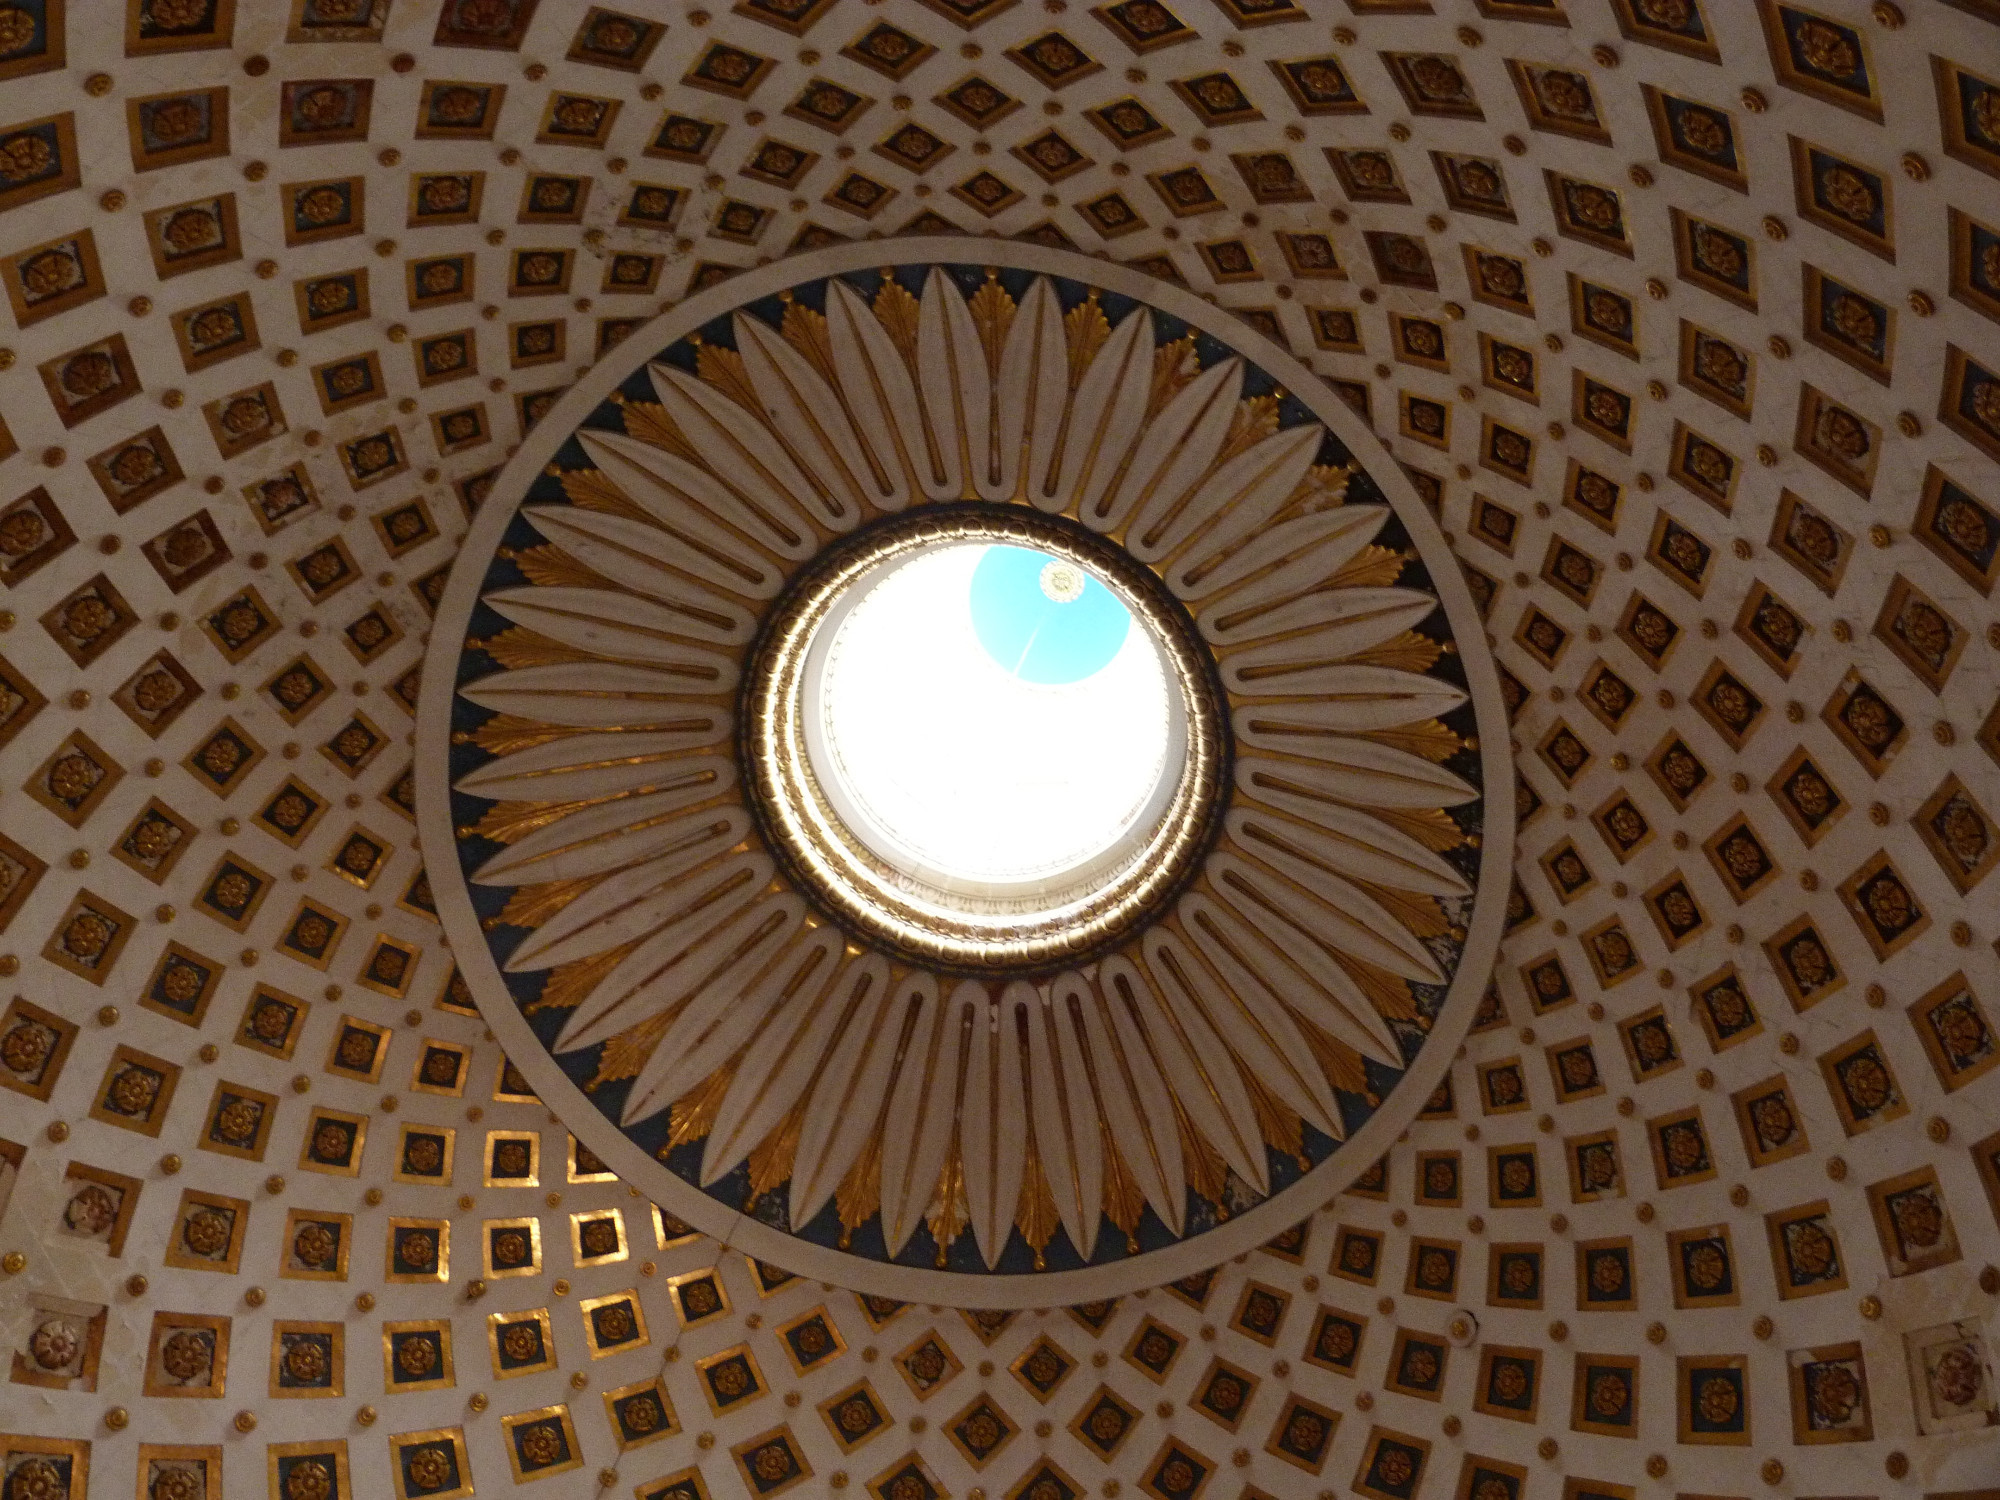 Ceiling of the Dome Mosta Rotunda<br/>
Catholic church